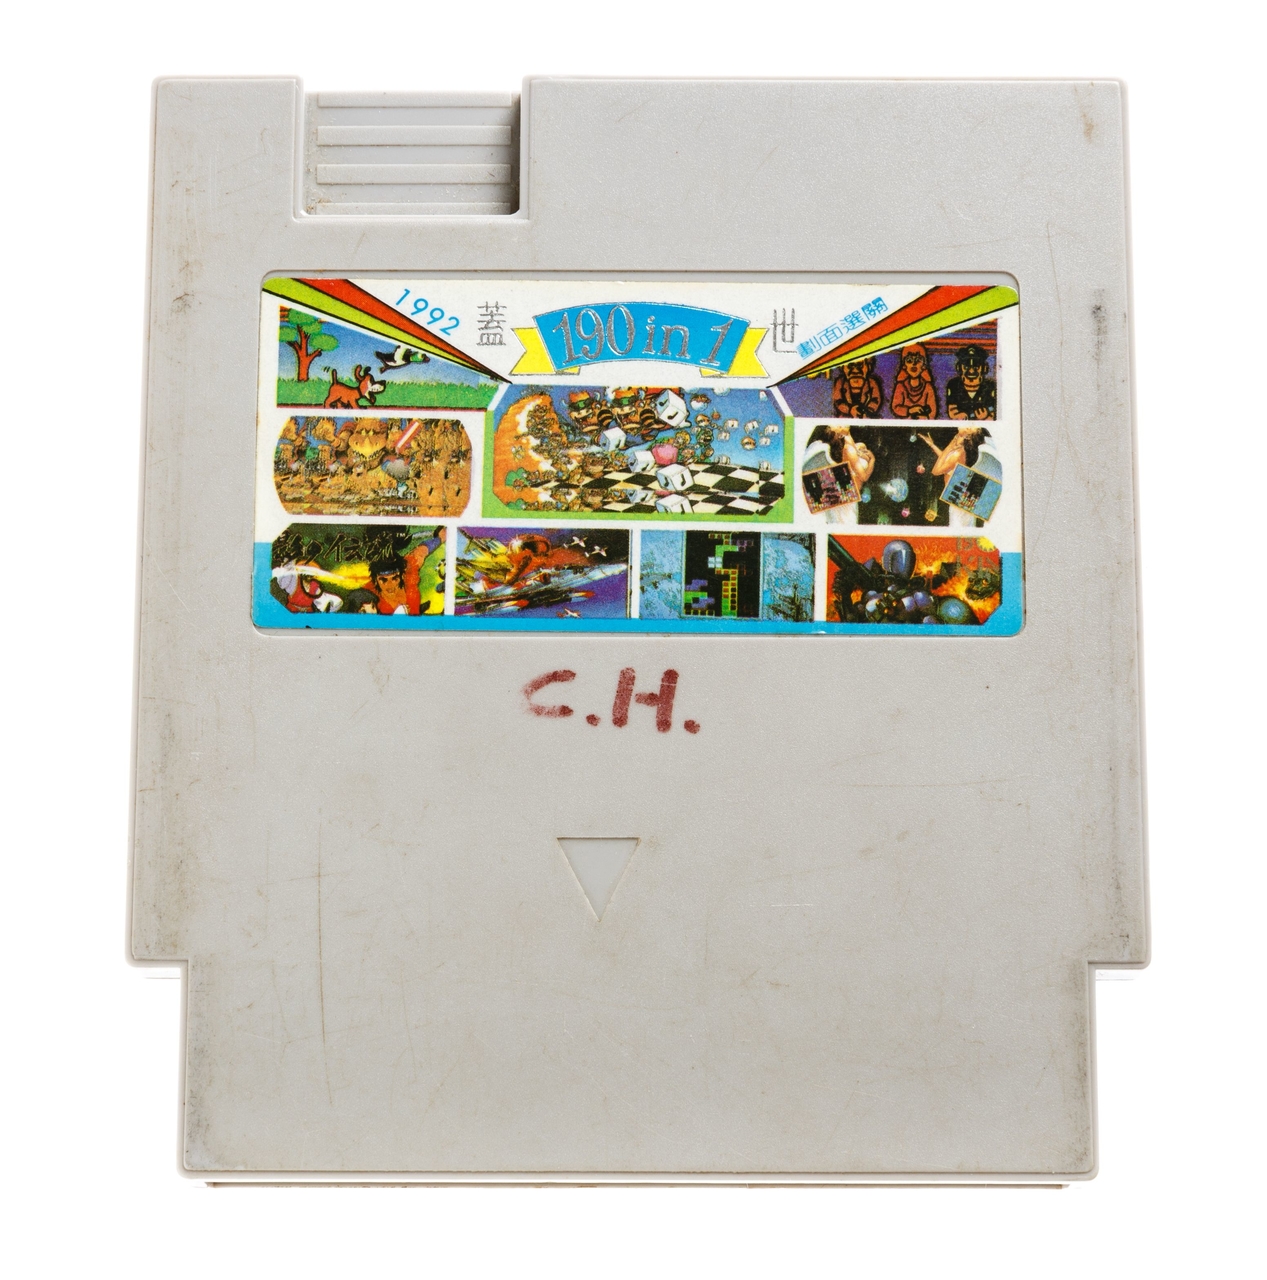 190 in 1 (Pirate) | Nintendo NES Games | RetroNintendoKopen.nl